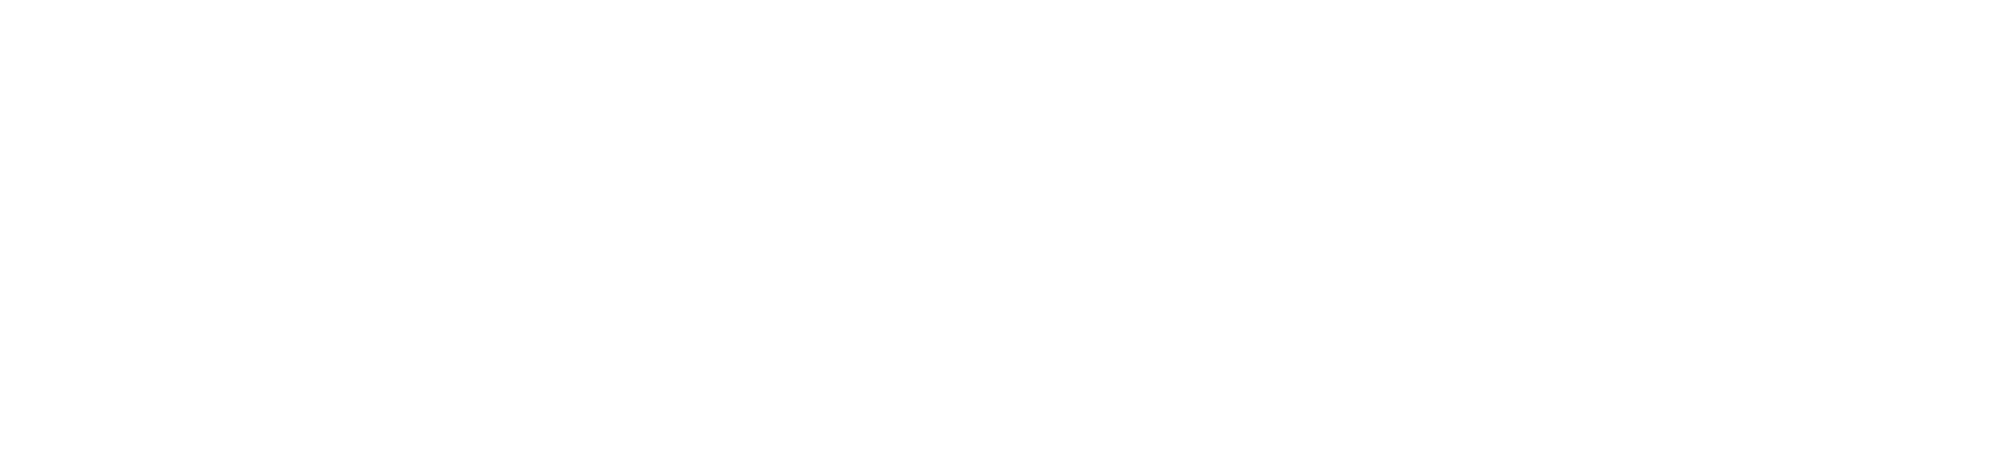 SataAzores Logo